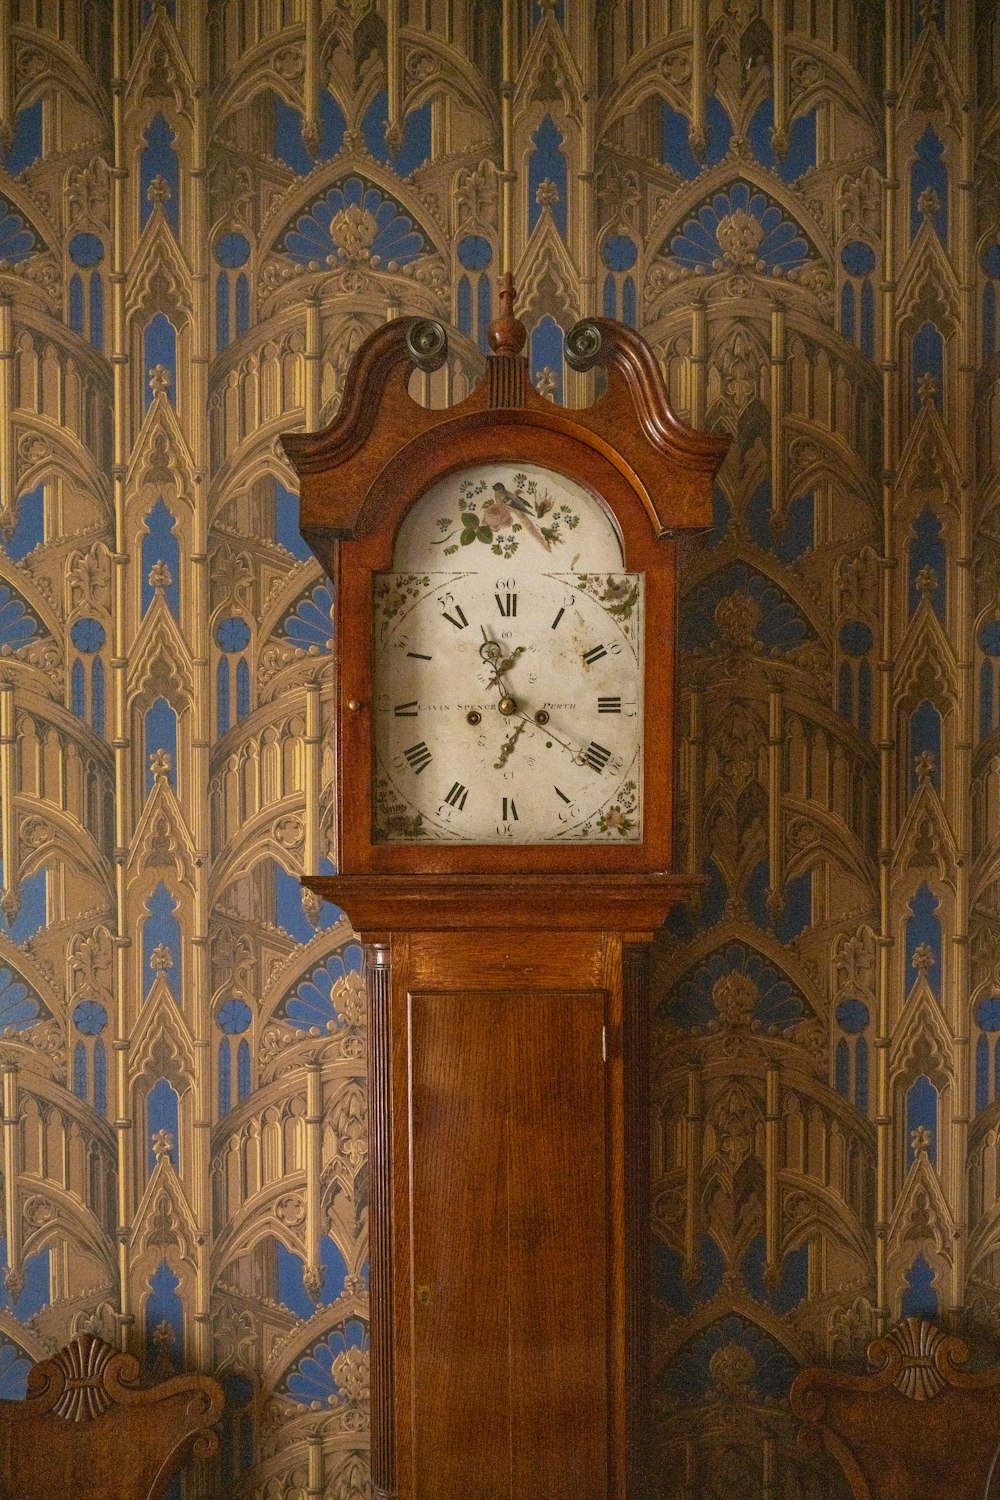 a grandfather clock sitting in a corner of a room